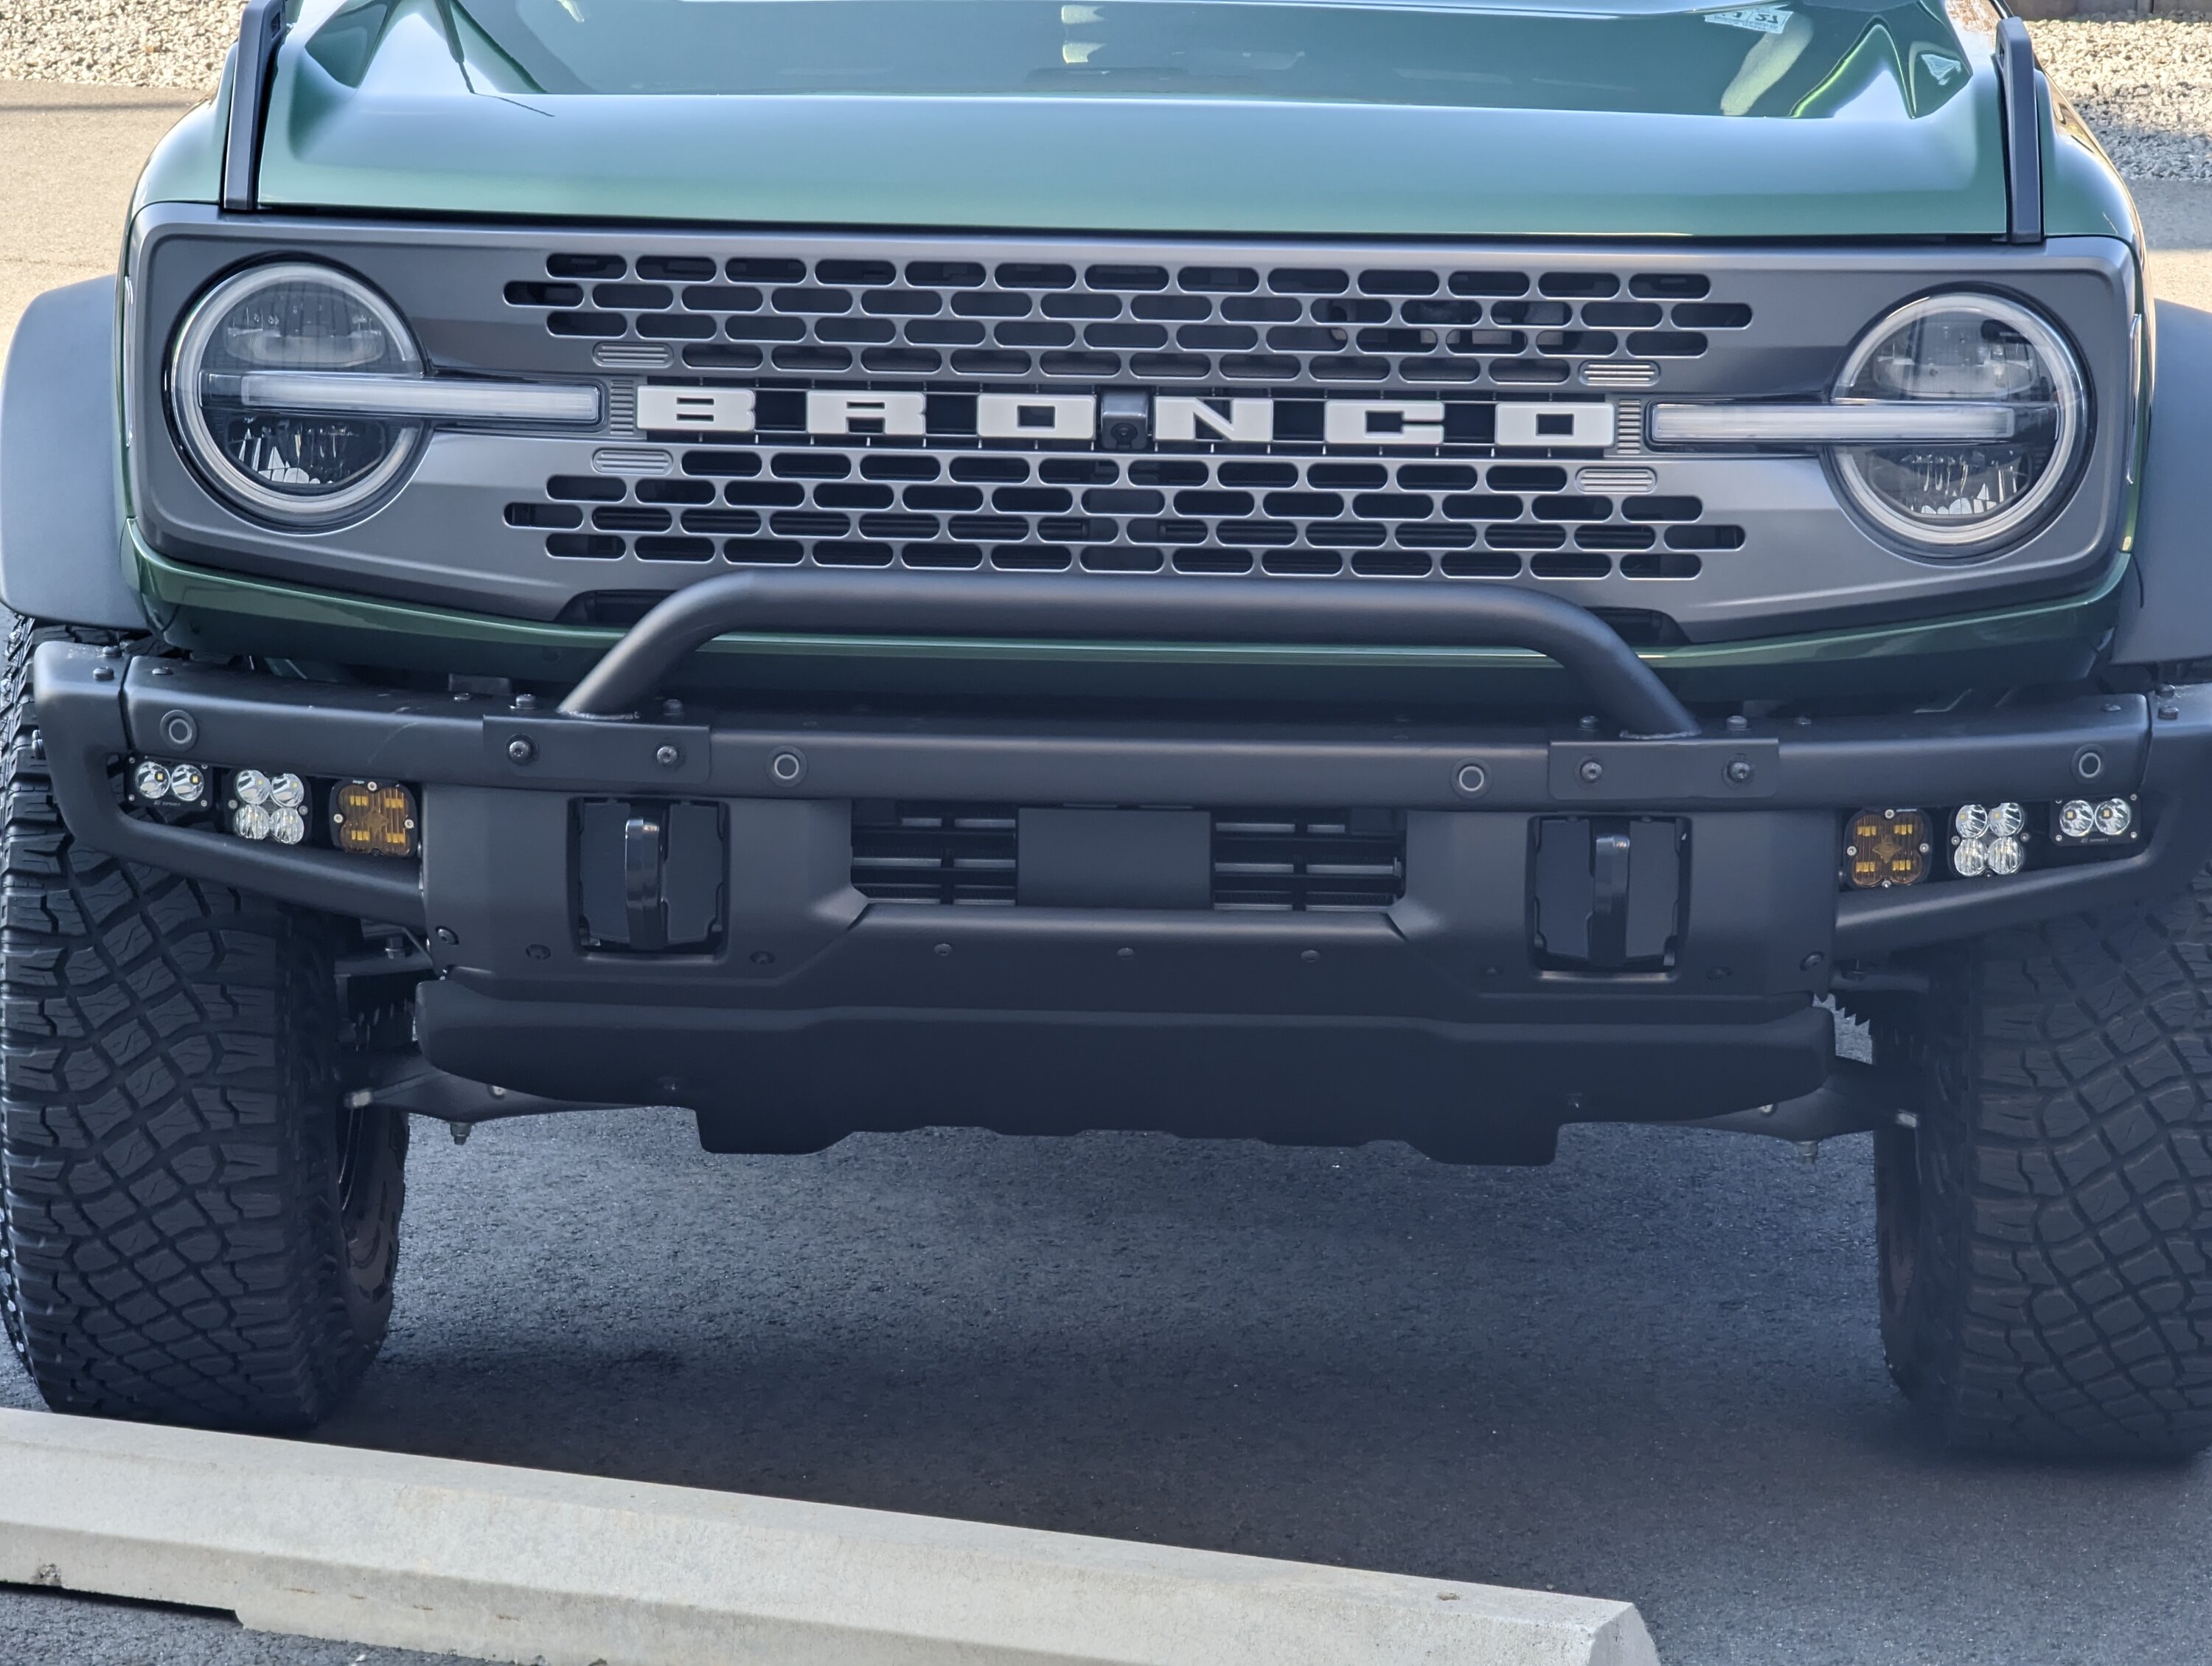 Ford Bronco build week 10/24 full